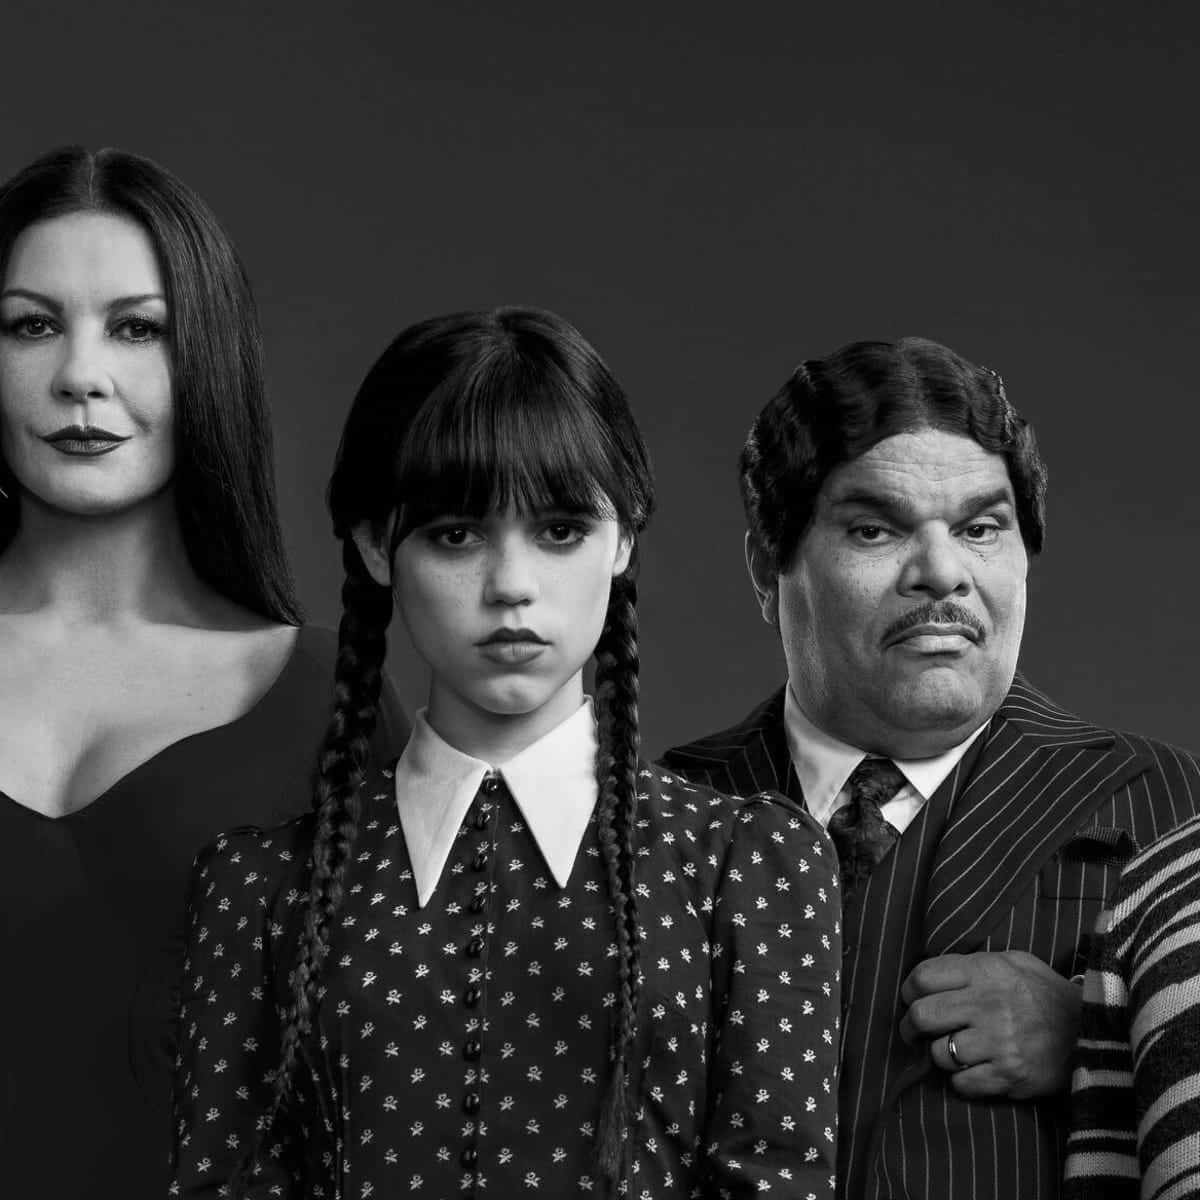 The Addams Family - Season 1